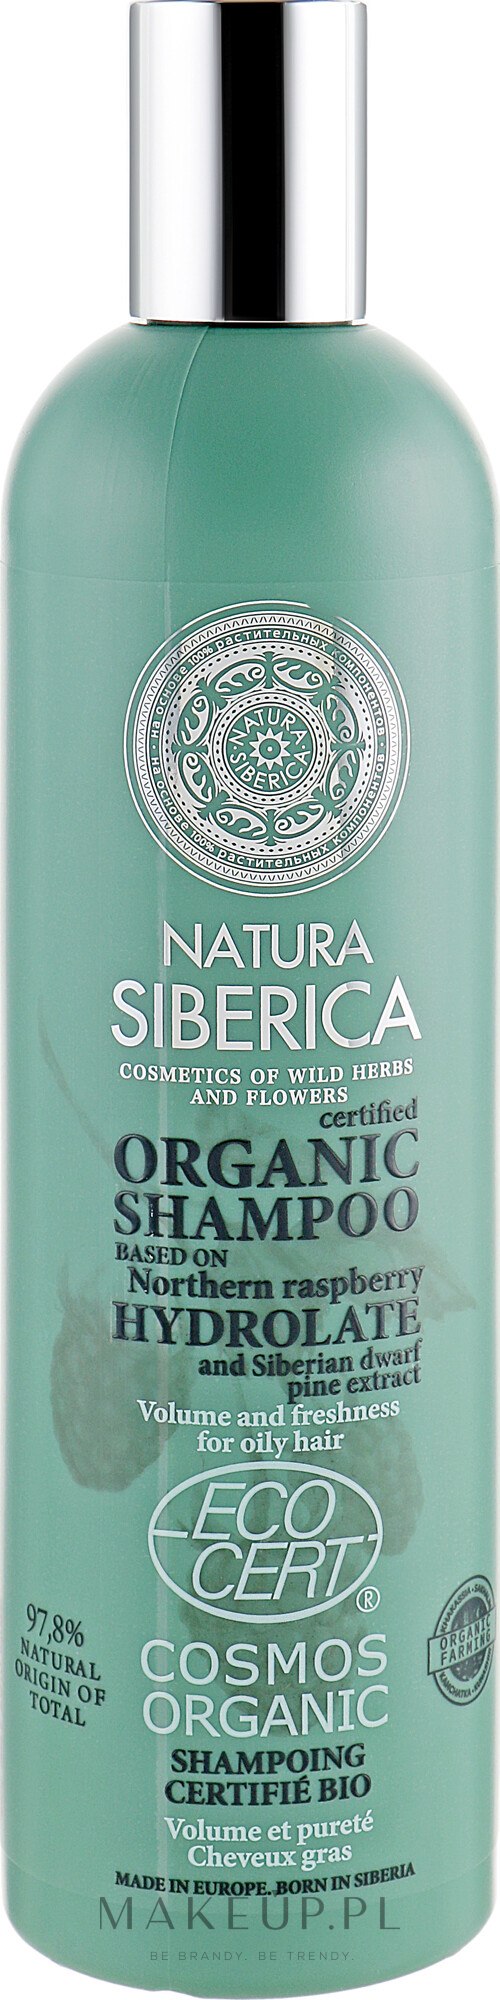 natura siberrica szampon